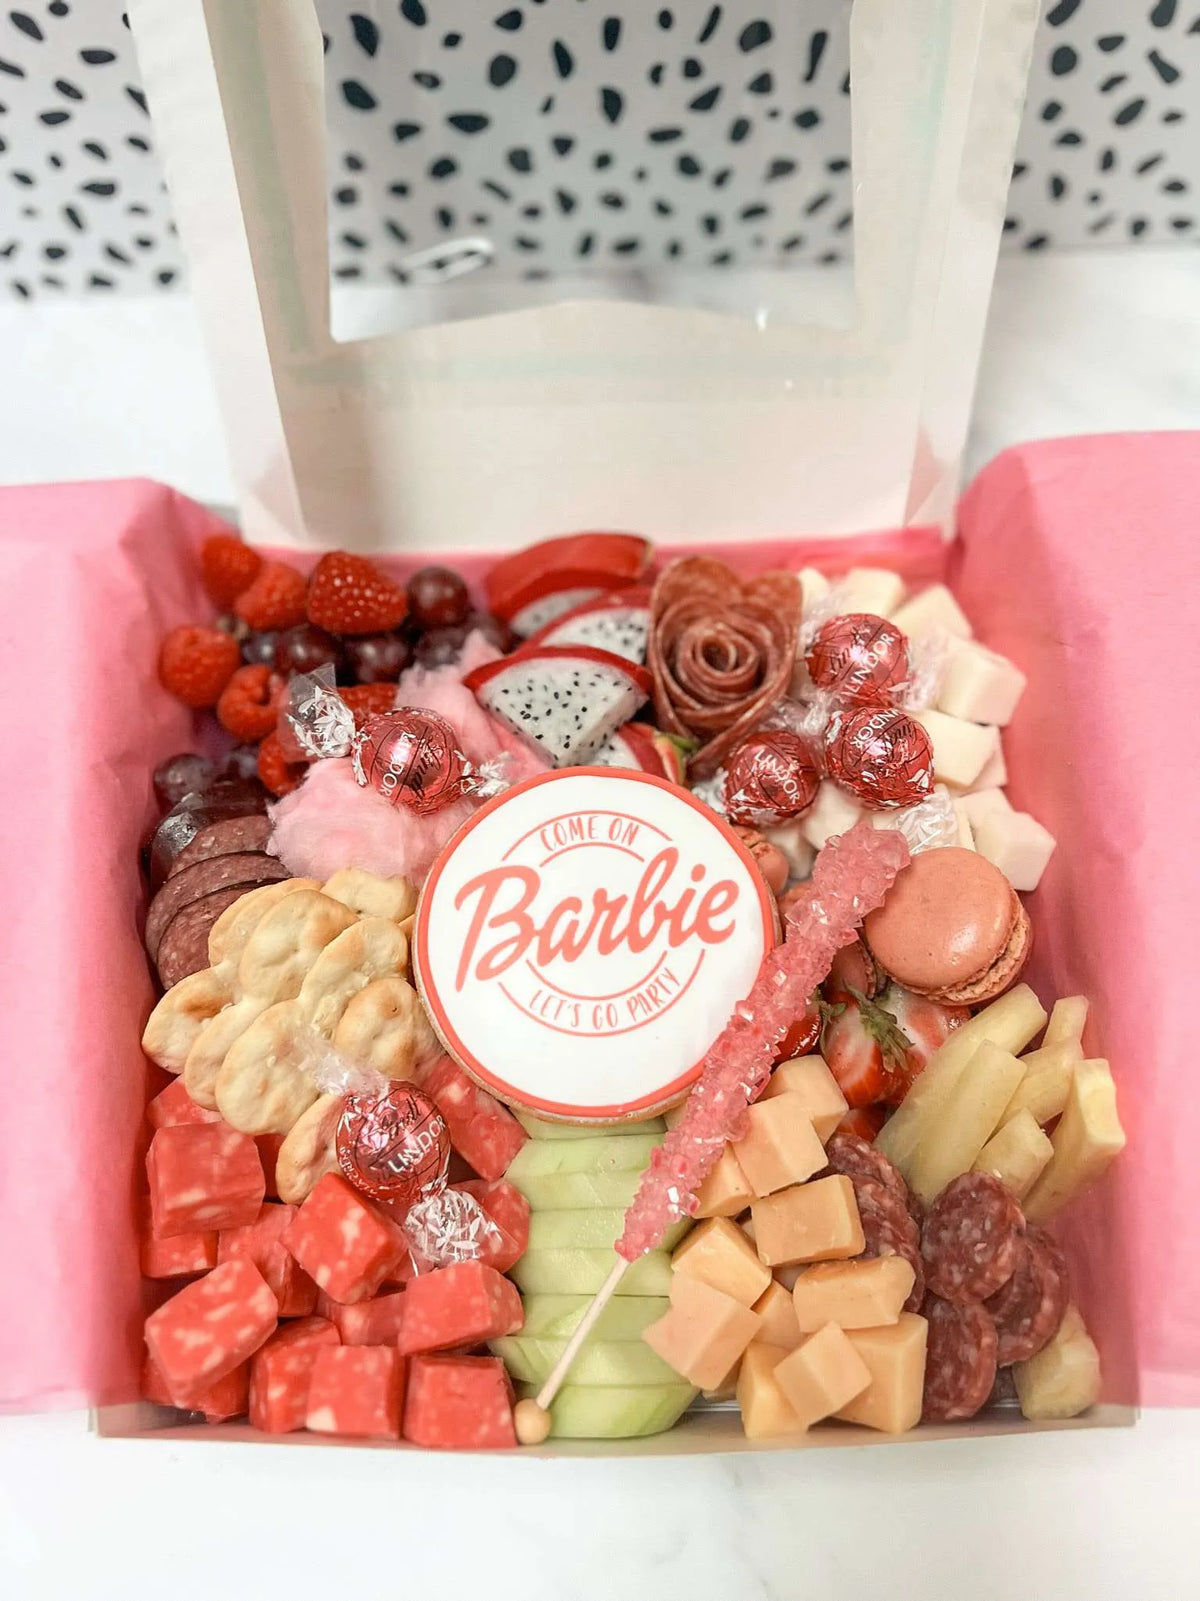 Barbie CharCUTErie Box